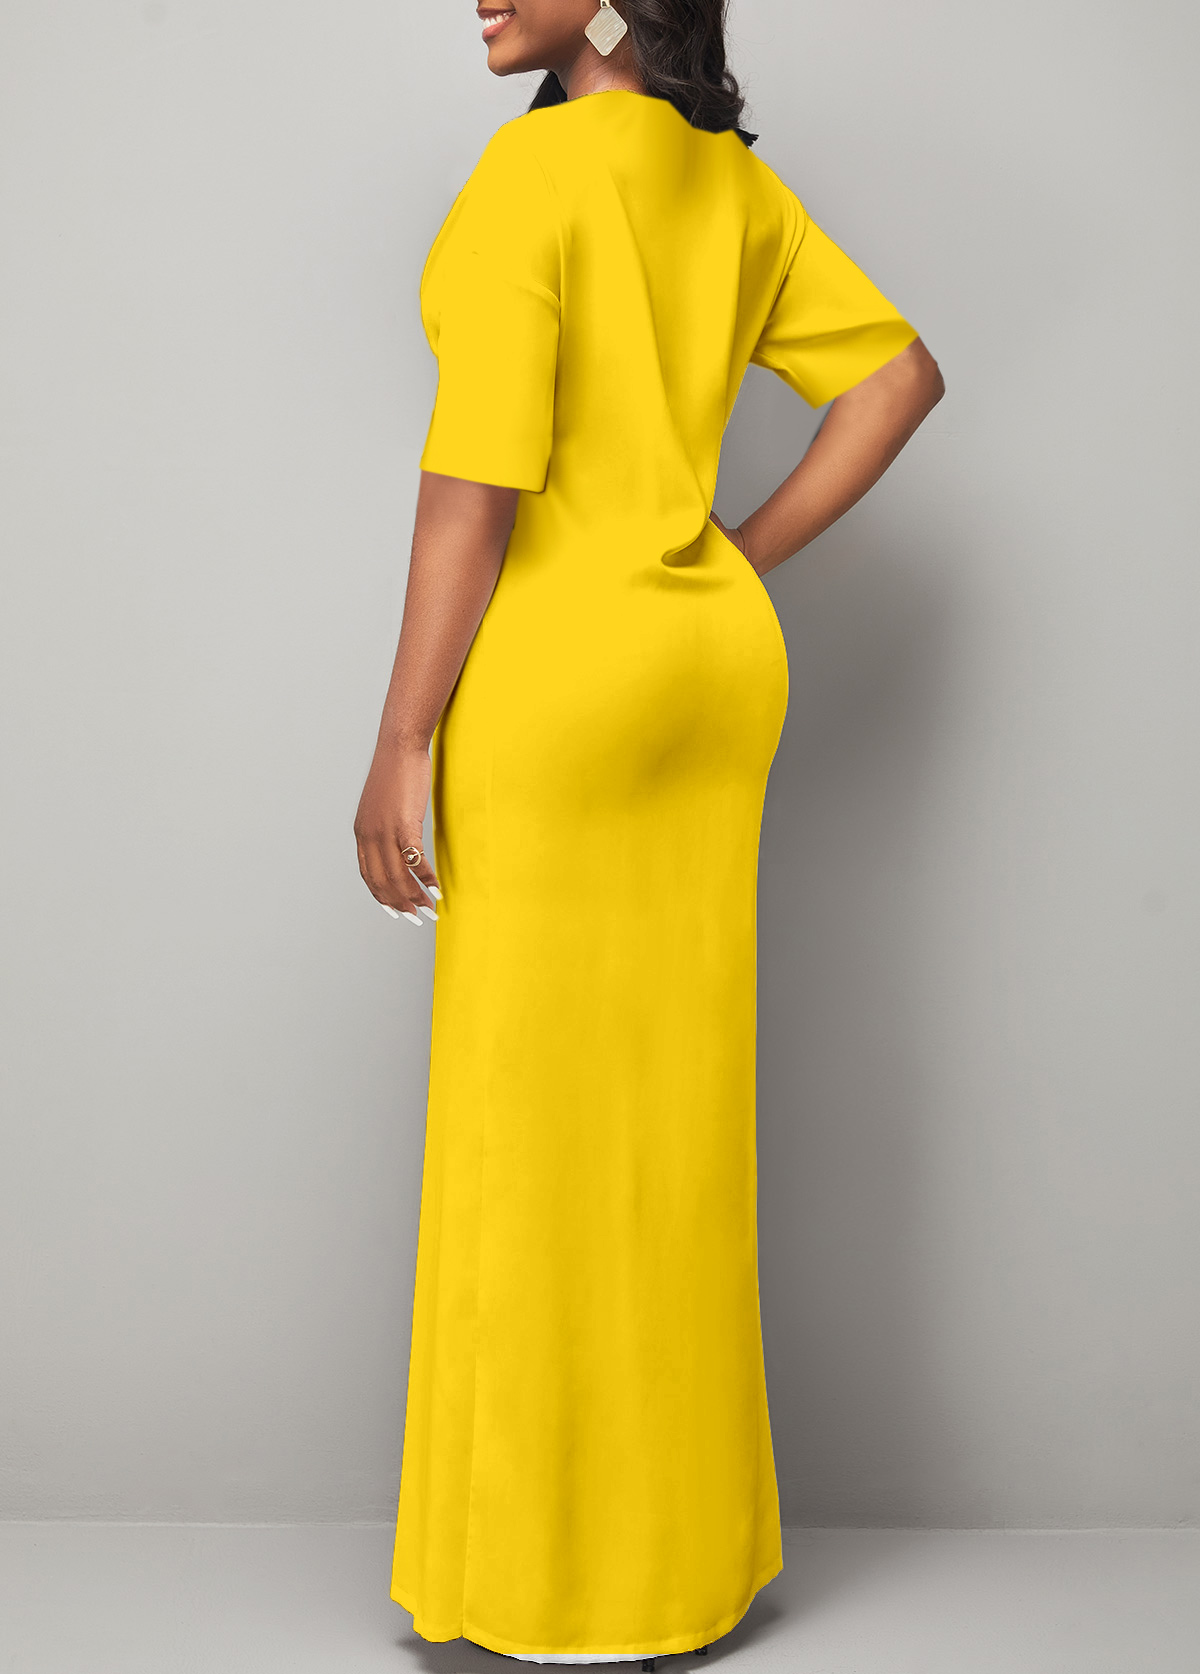 Tribal Print Front Slit Yellow Maxi Dress